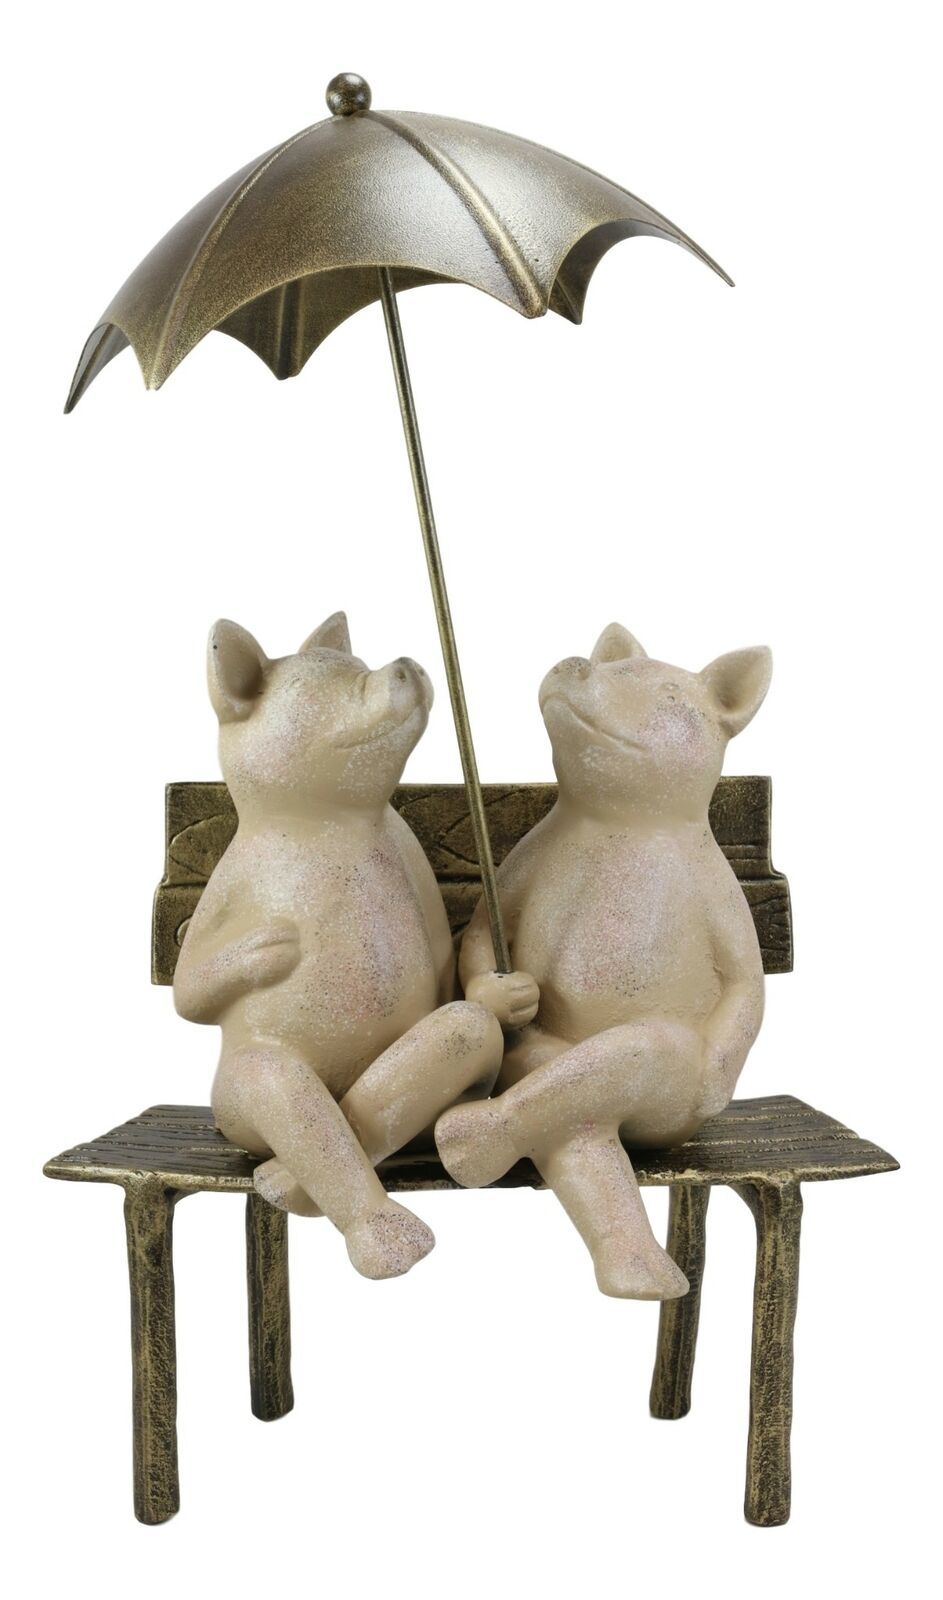 19 Aluminum Rain Romance Pig Couple On Bench With Umbrella Rustic Garden Statue